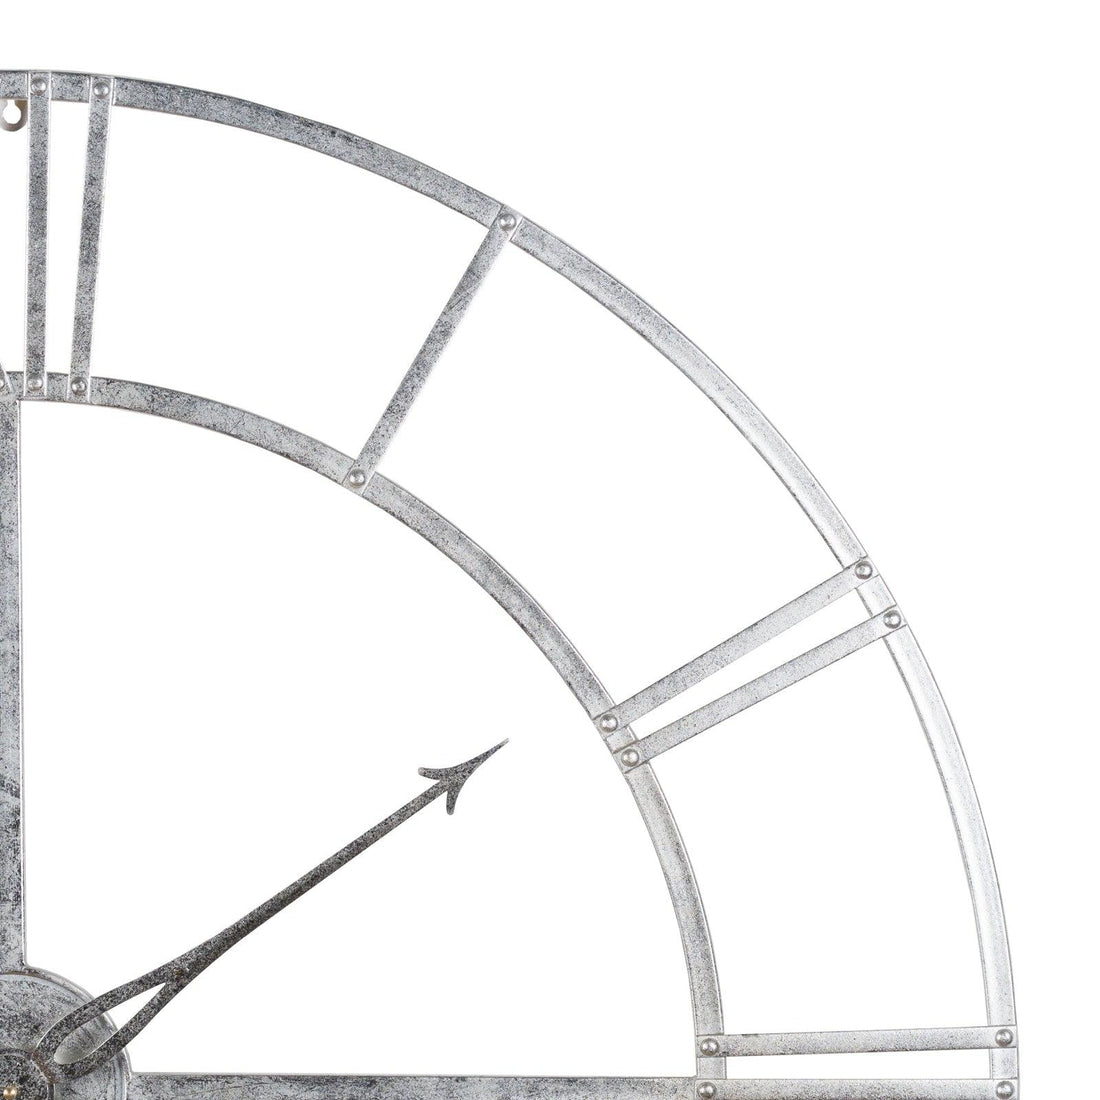 Large Silver Foil Skeleton Wall Clock - £159.95 - Wall Clocks 